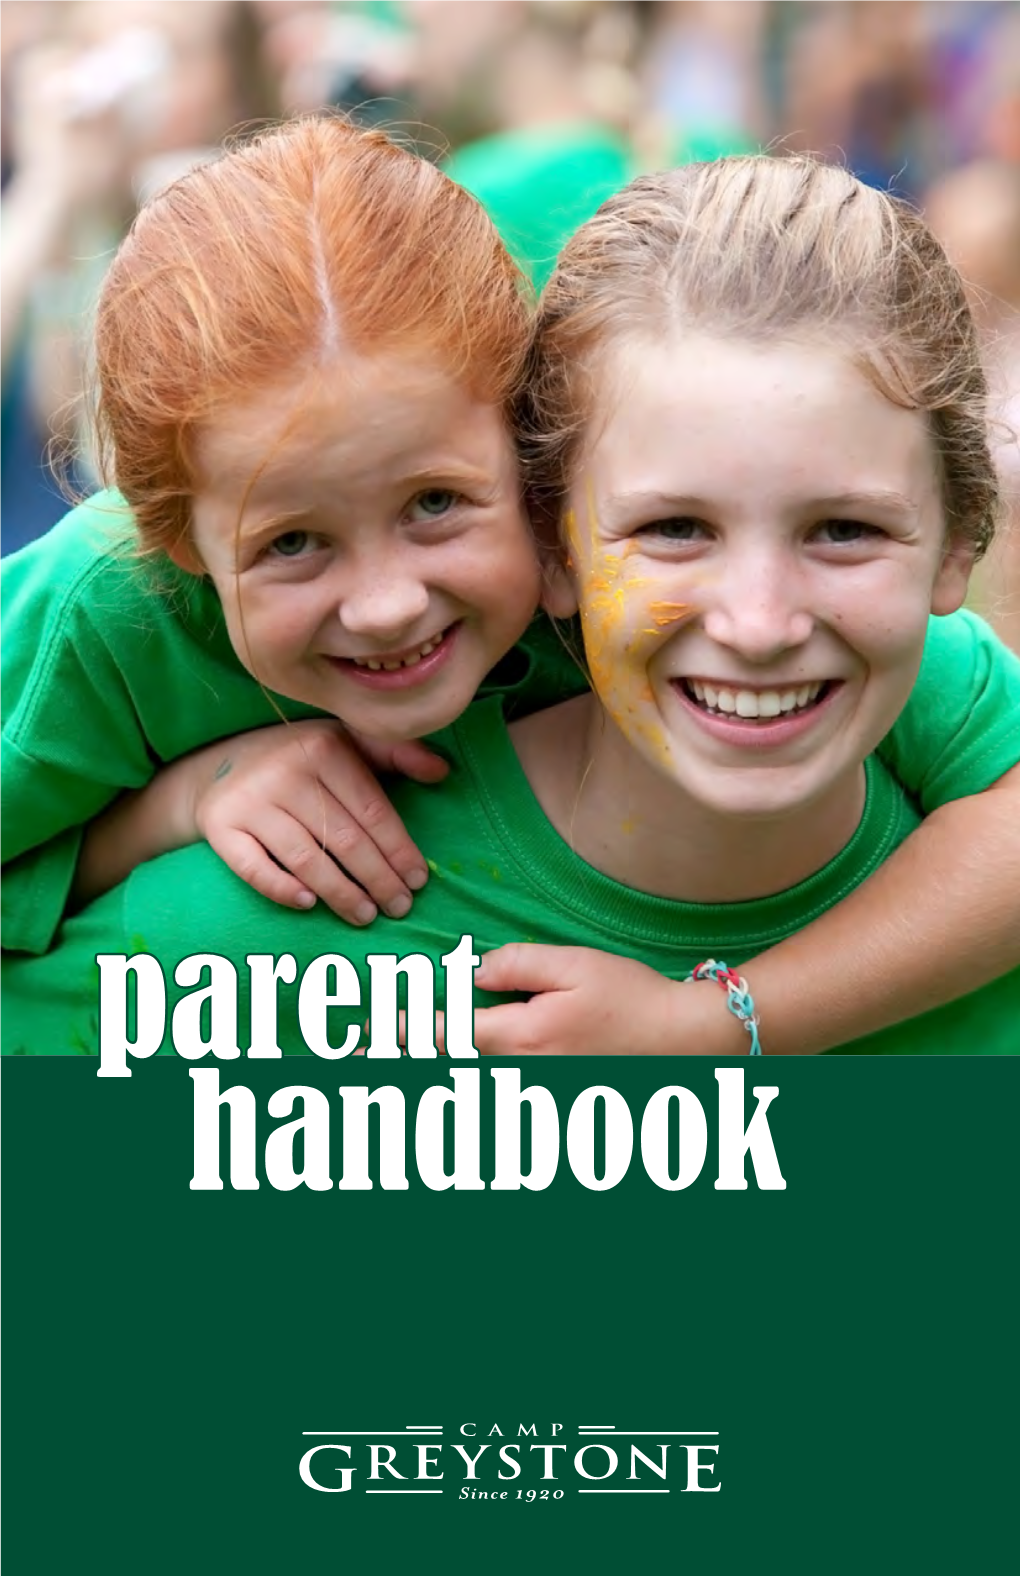 Parent Handbook Camp Greystone 2014 Session Dates: Junior: Mon